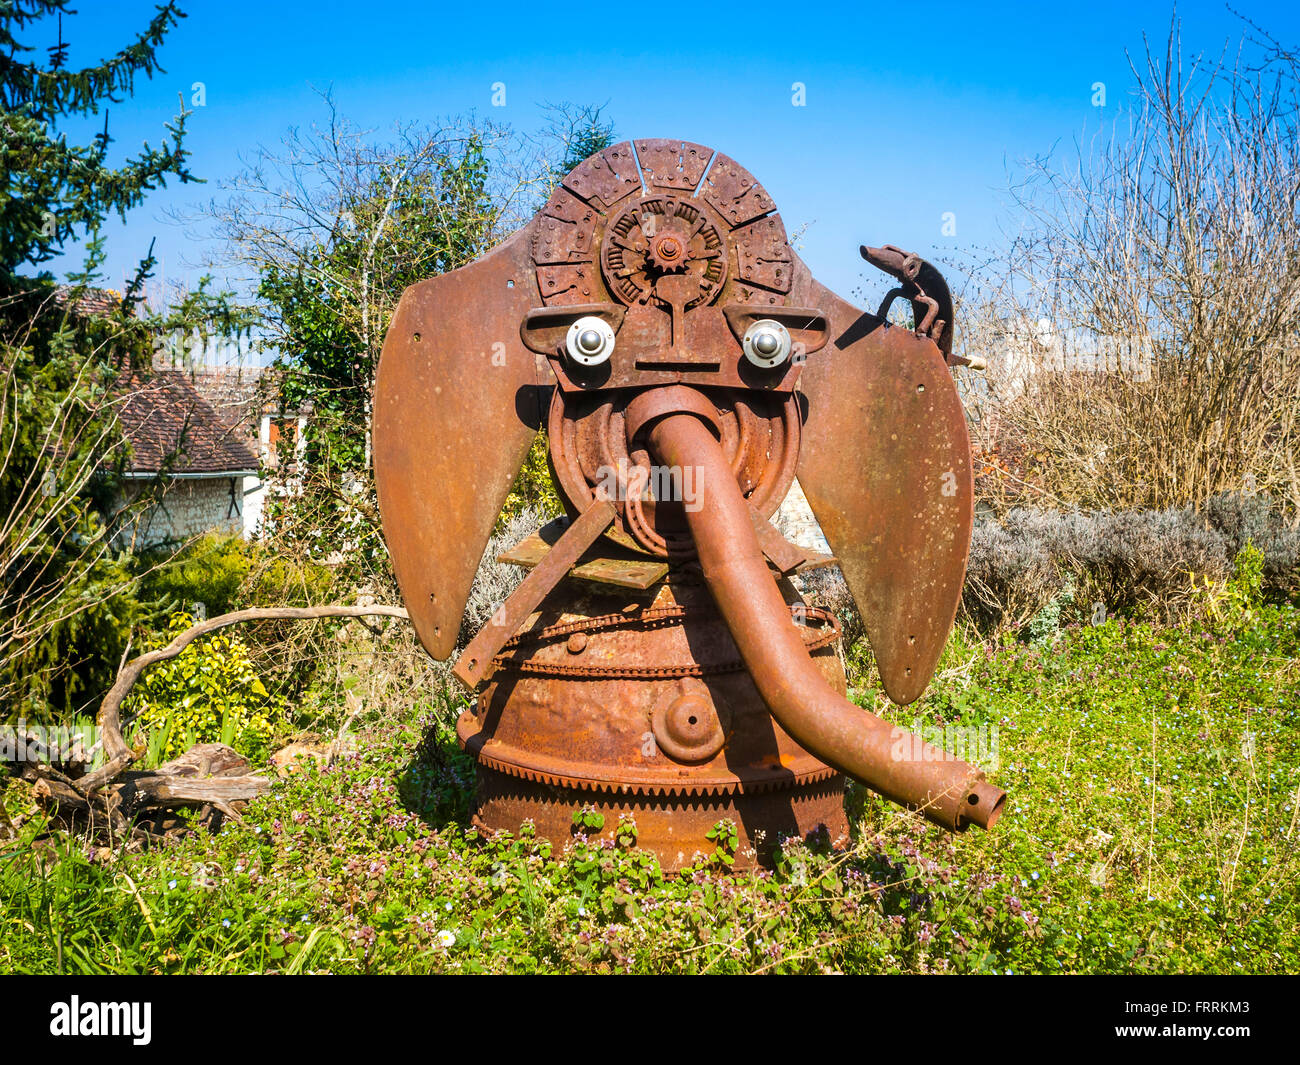 Schrott Metall Elefant Skulptur - Frankreich. Stockfoto